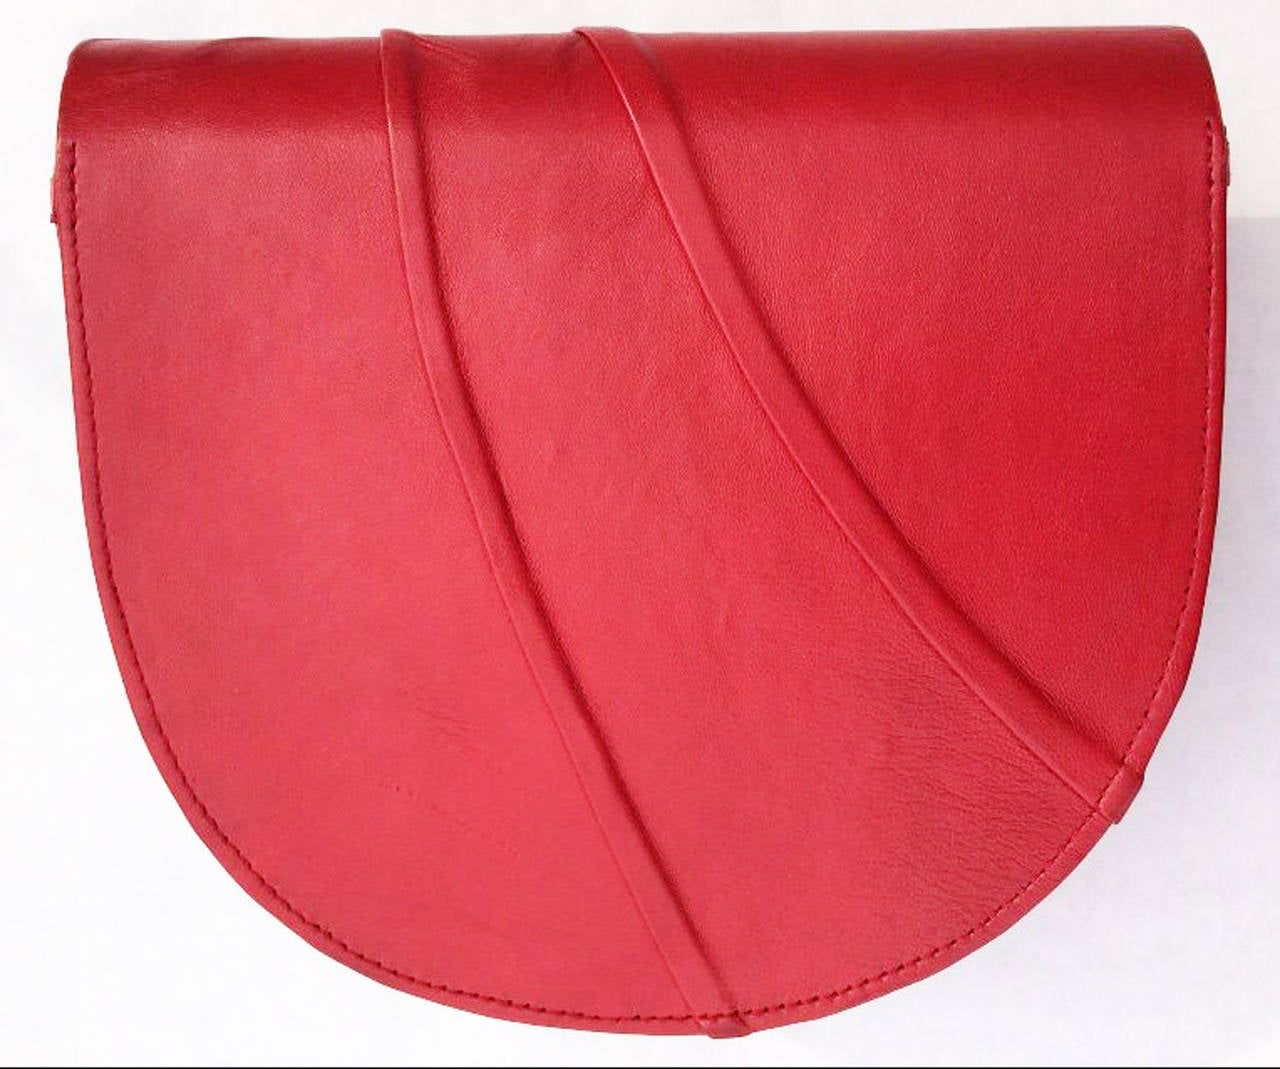 Sculpted Leather Clutch Handbag 1980s 1